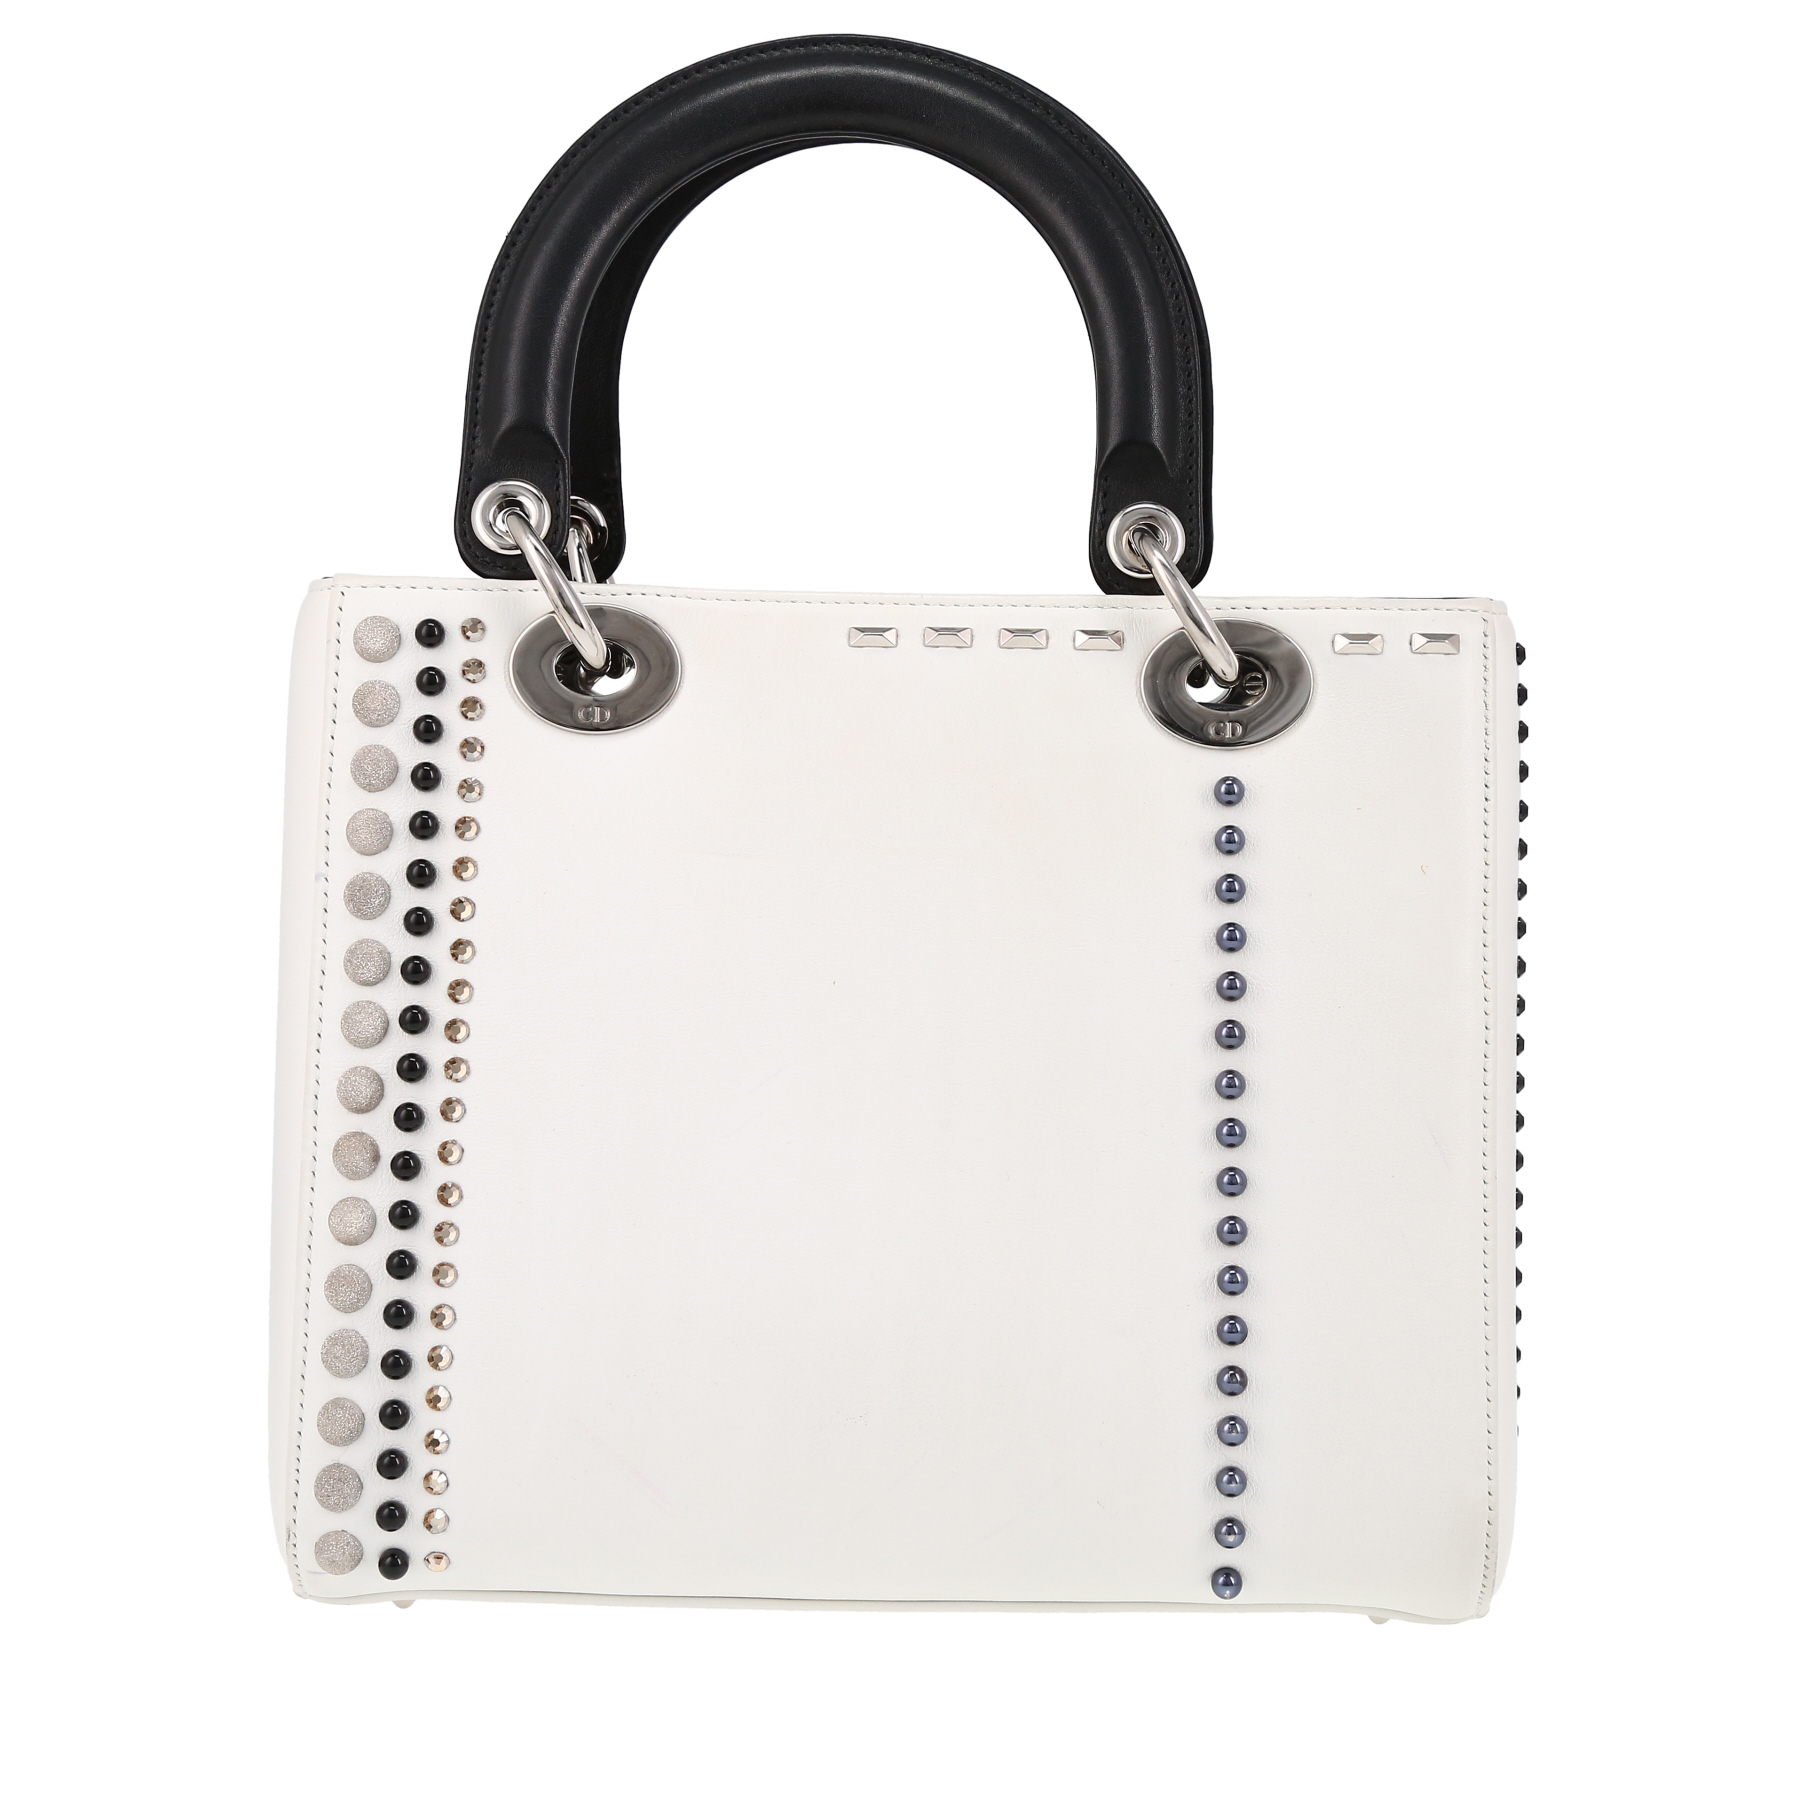 Lady Dior Handbag In White Leather